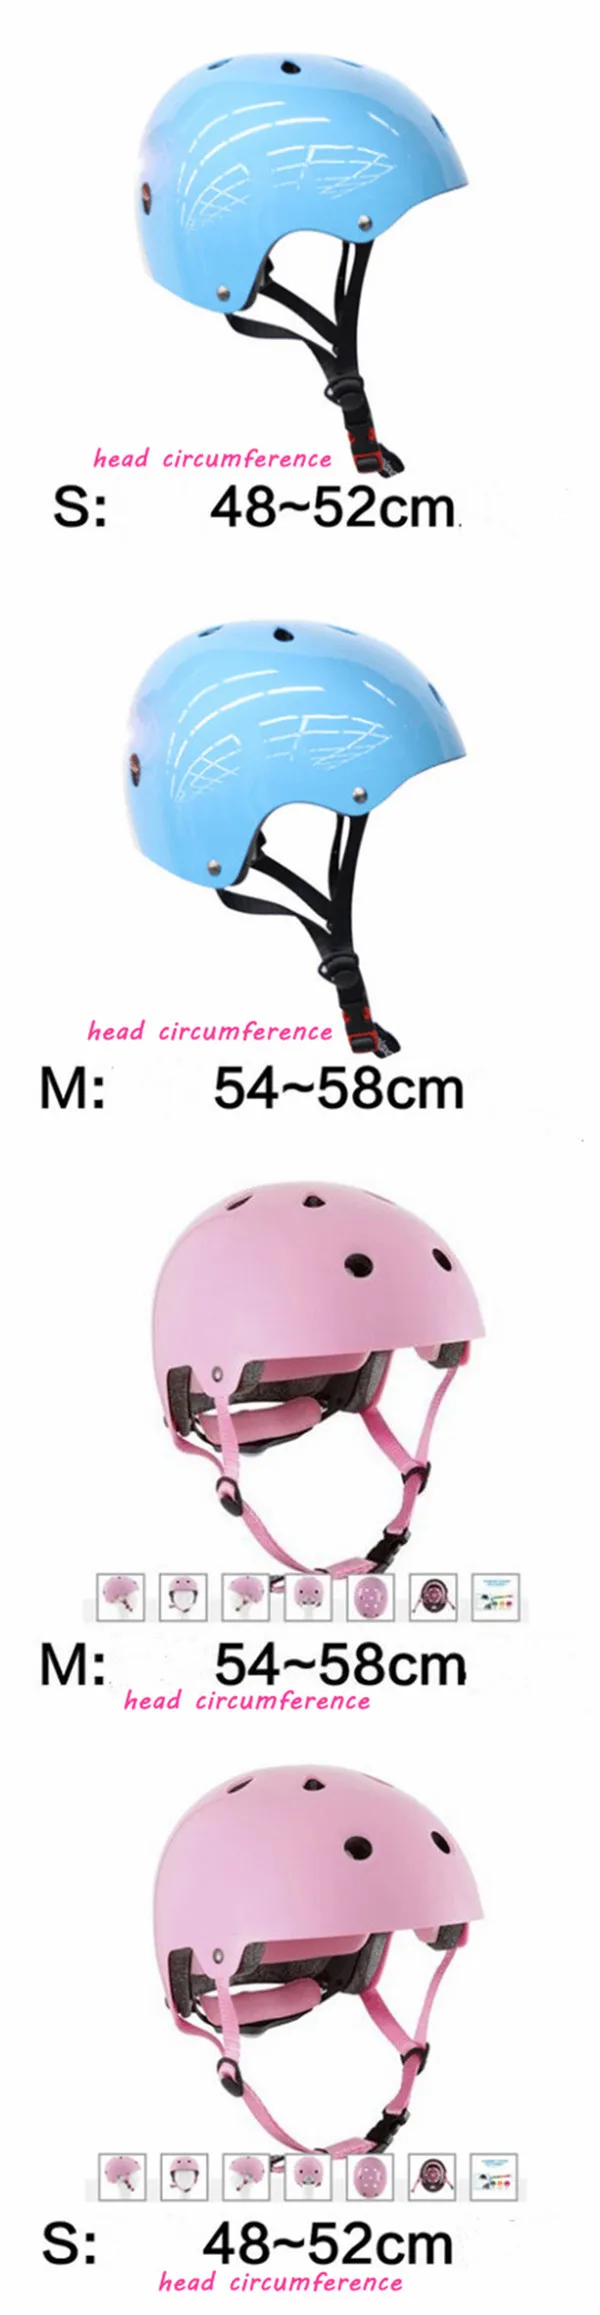 kids helmet ebay